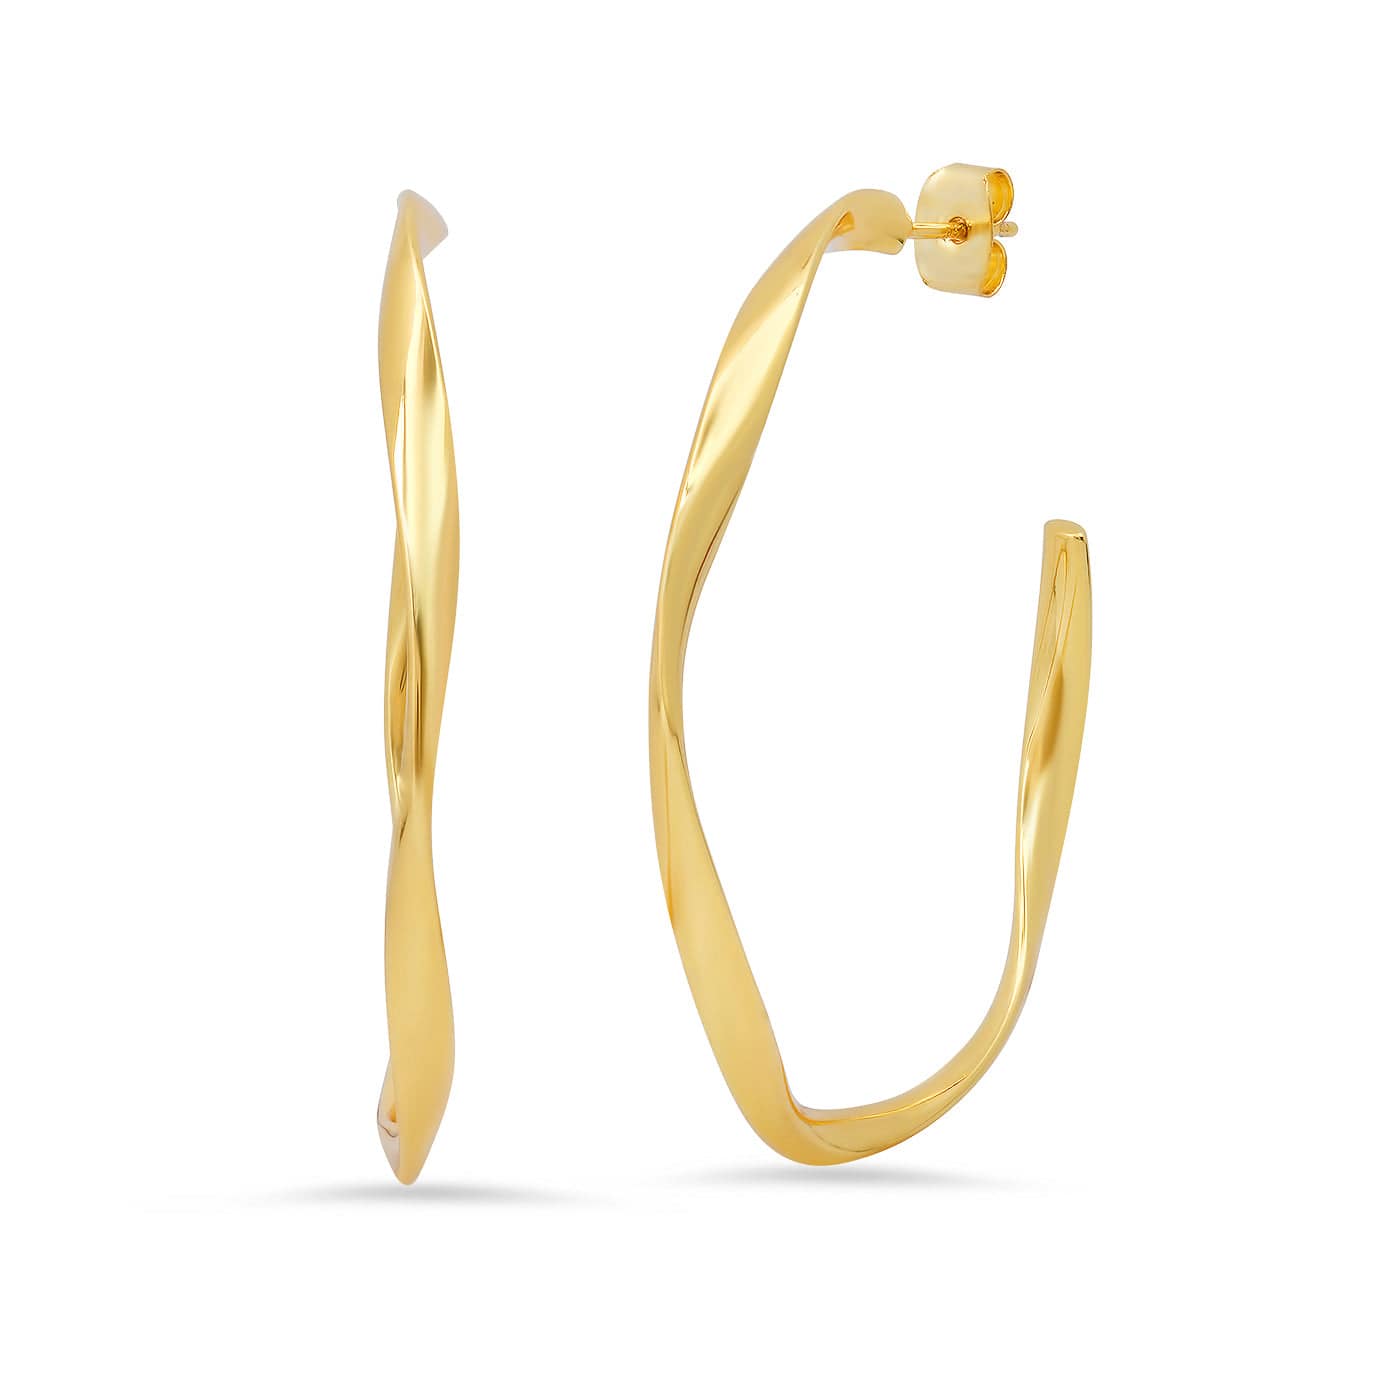 TAI JEWELRY Earrings Large Wavy Gold Hoops